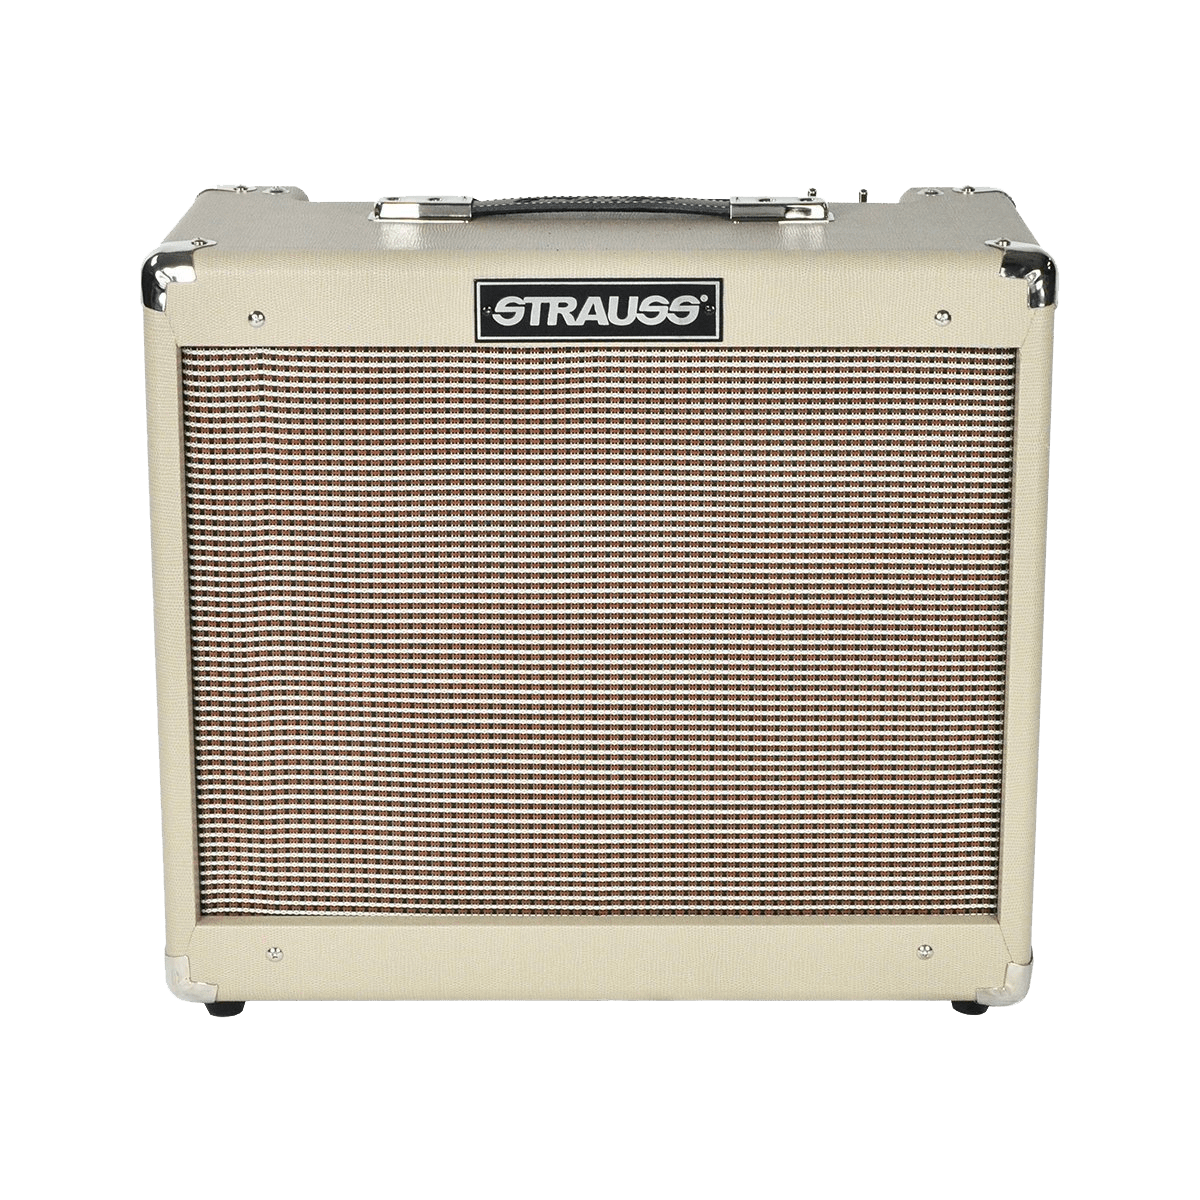 Strauss Amps Strauss 20 Watt Valve Combo Guitar Amplifier Cream SVT-20R-CRM - Byron Music